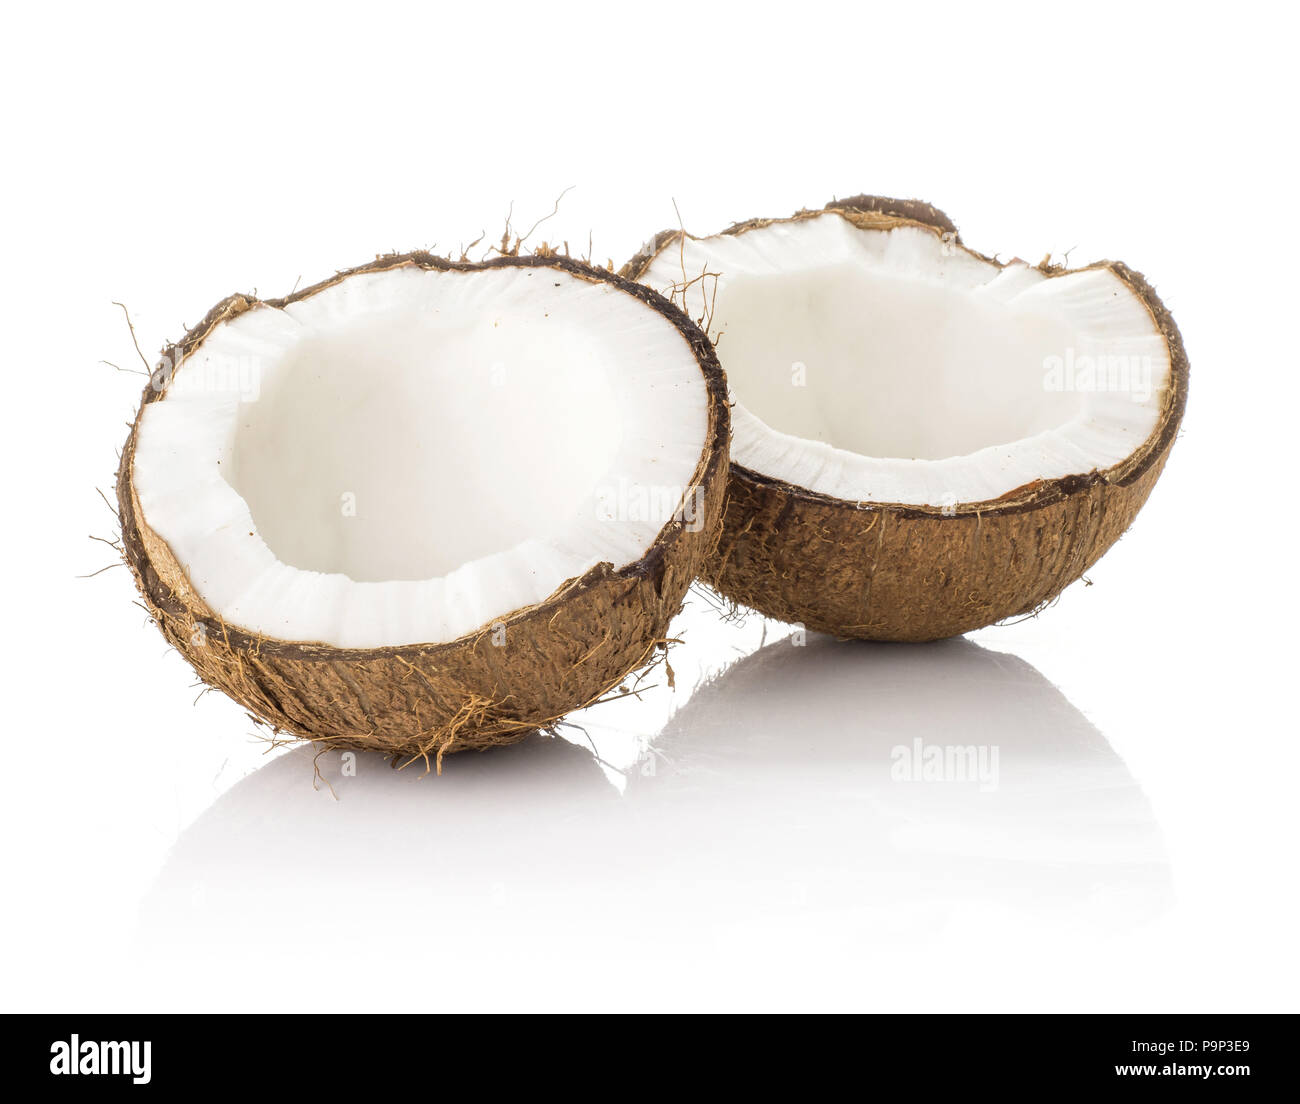 Coconut Half Shell